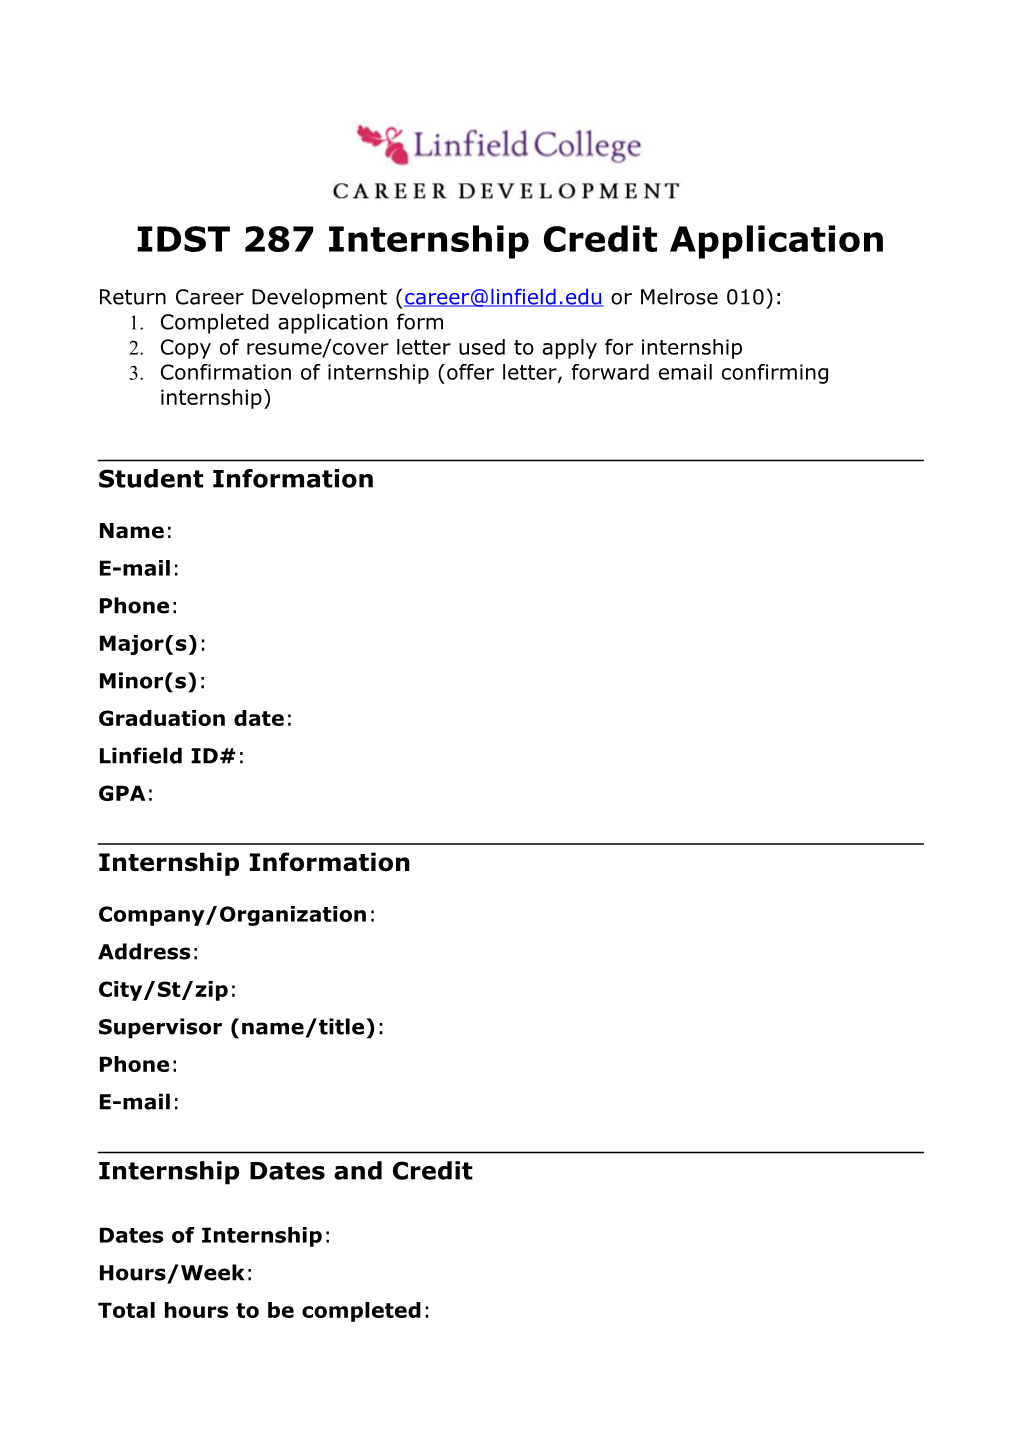 IDST 287 Internship Credit Application